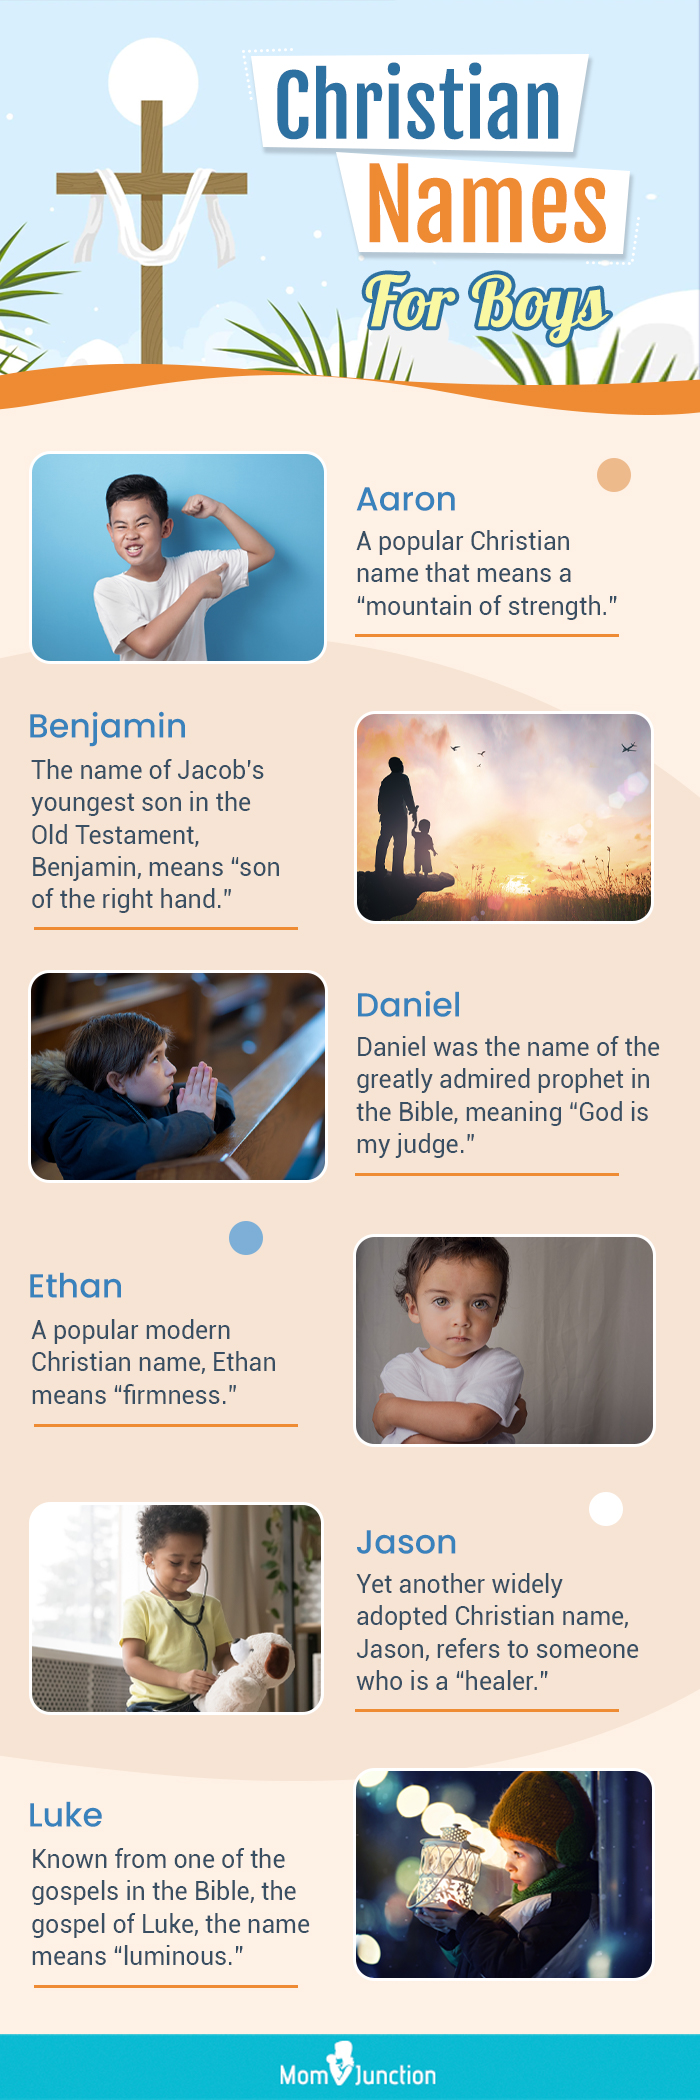 christian names for boys (infographic)